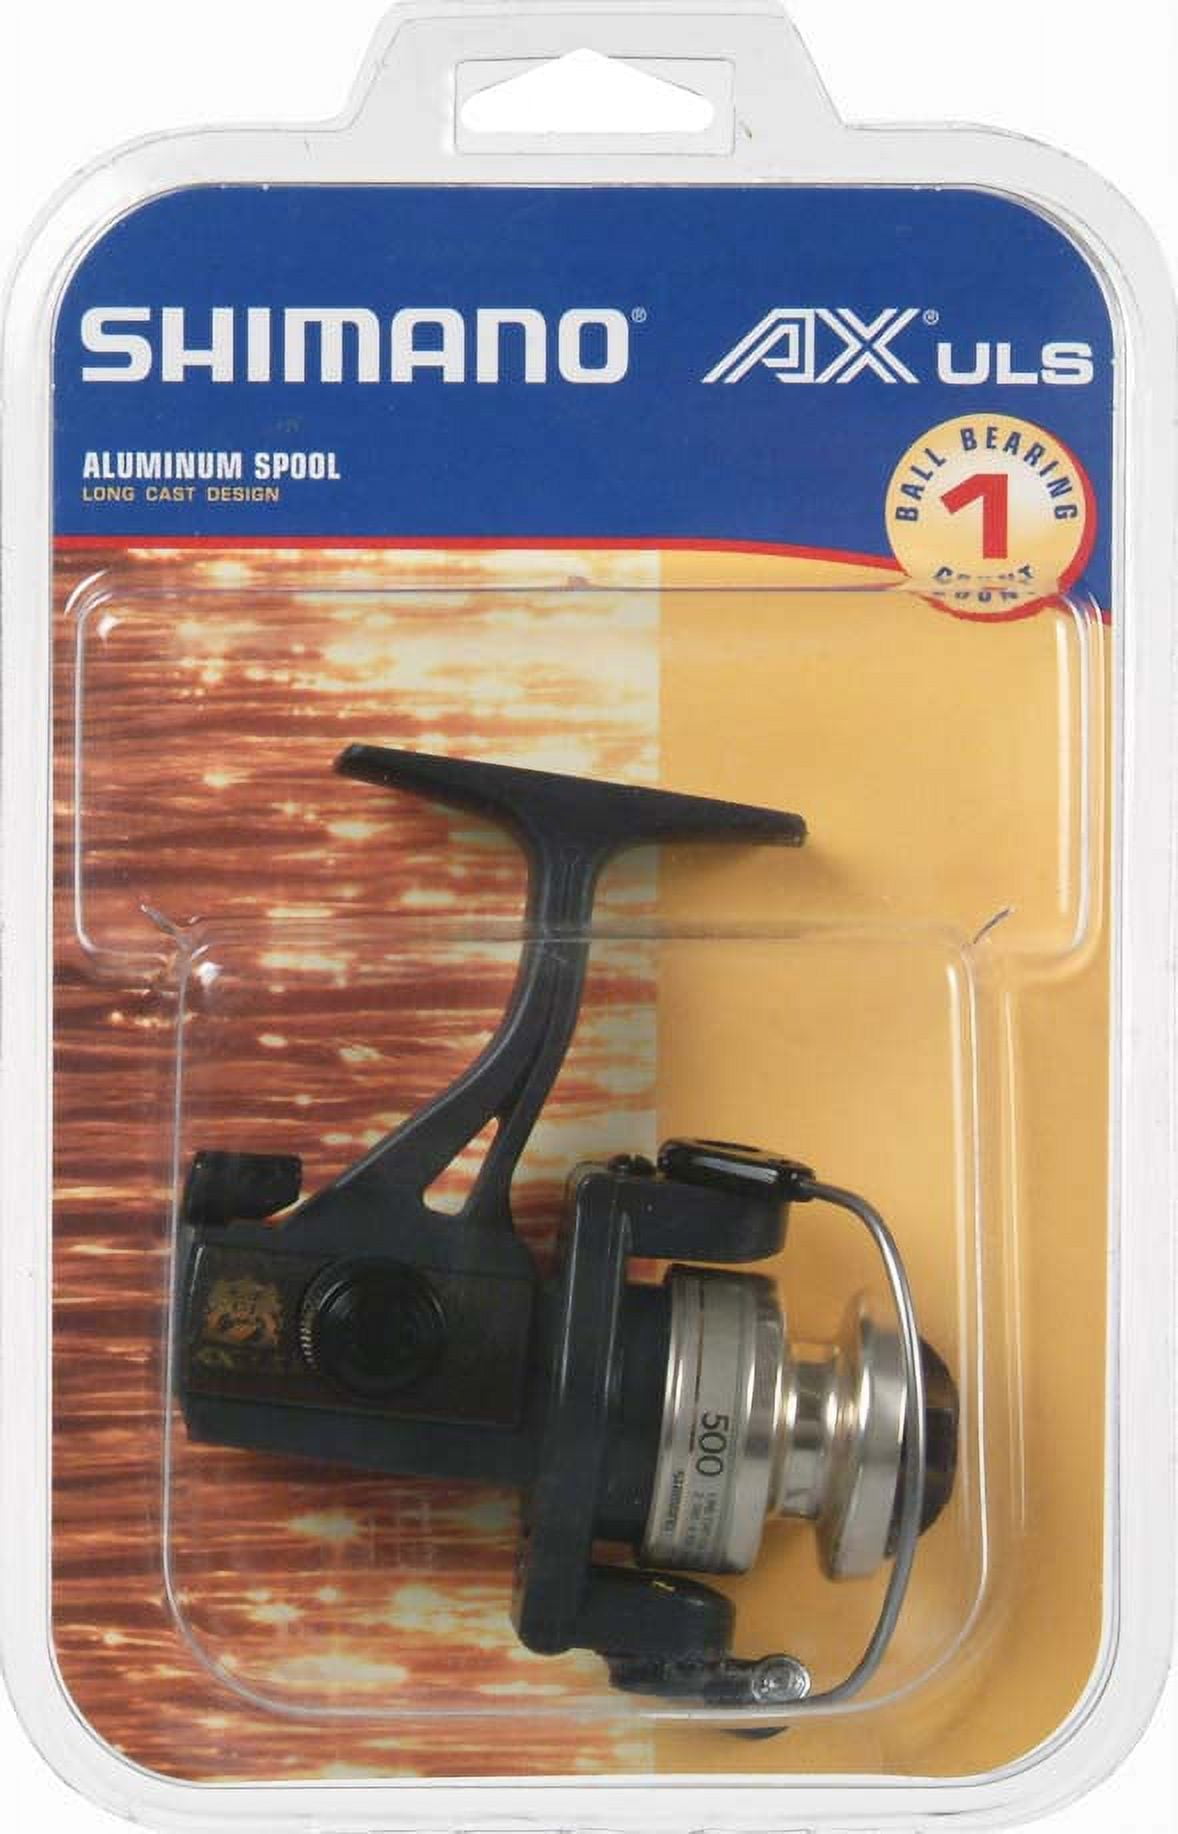 SHIMANO AX-ULS SPINNING Reel with Manual and Box $6.50 - PicClick